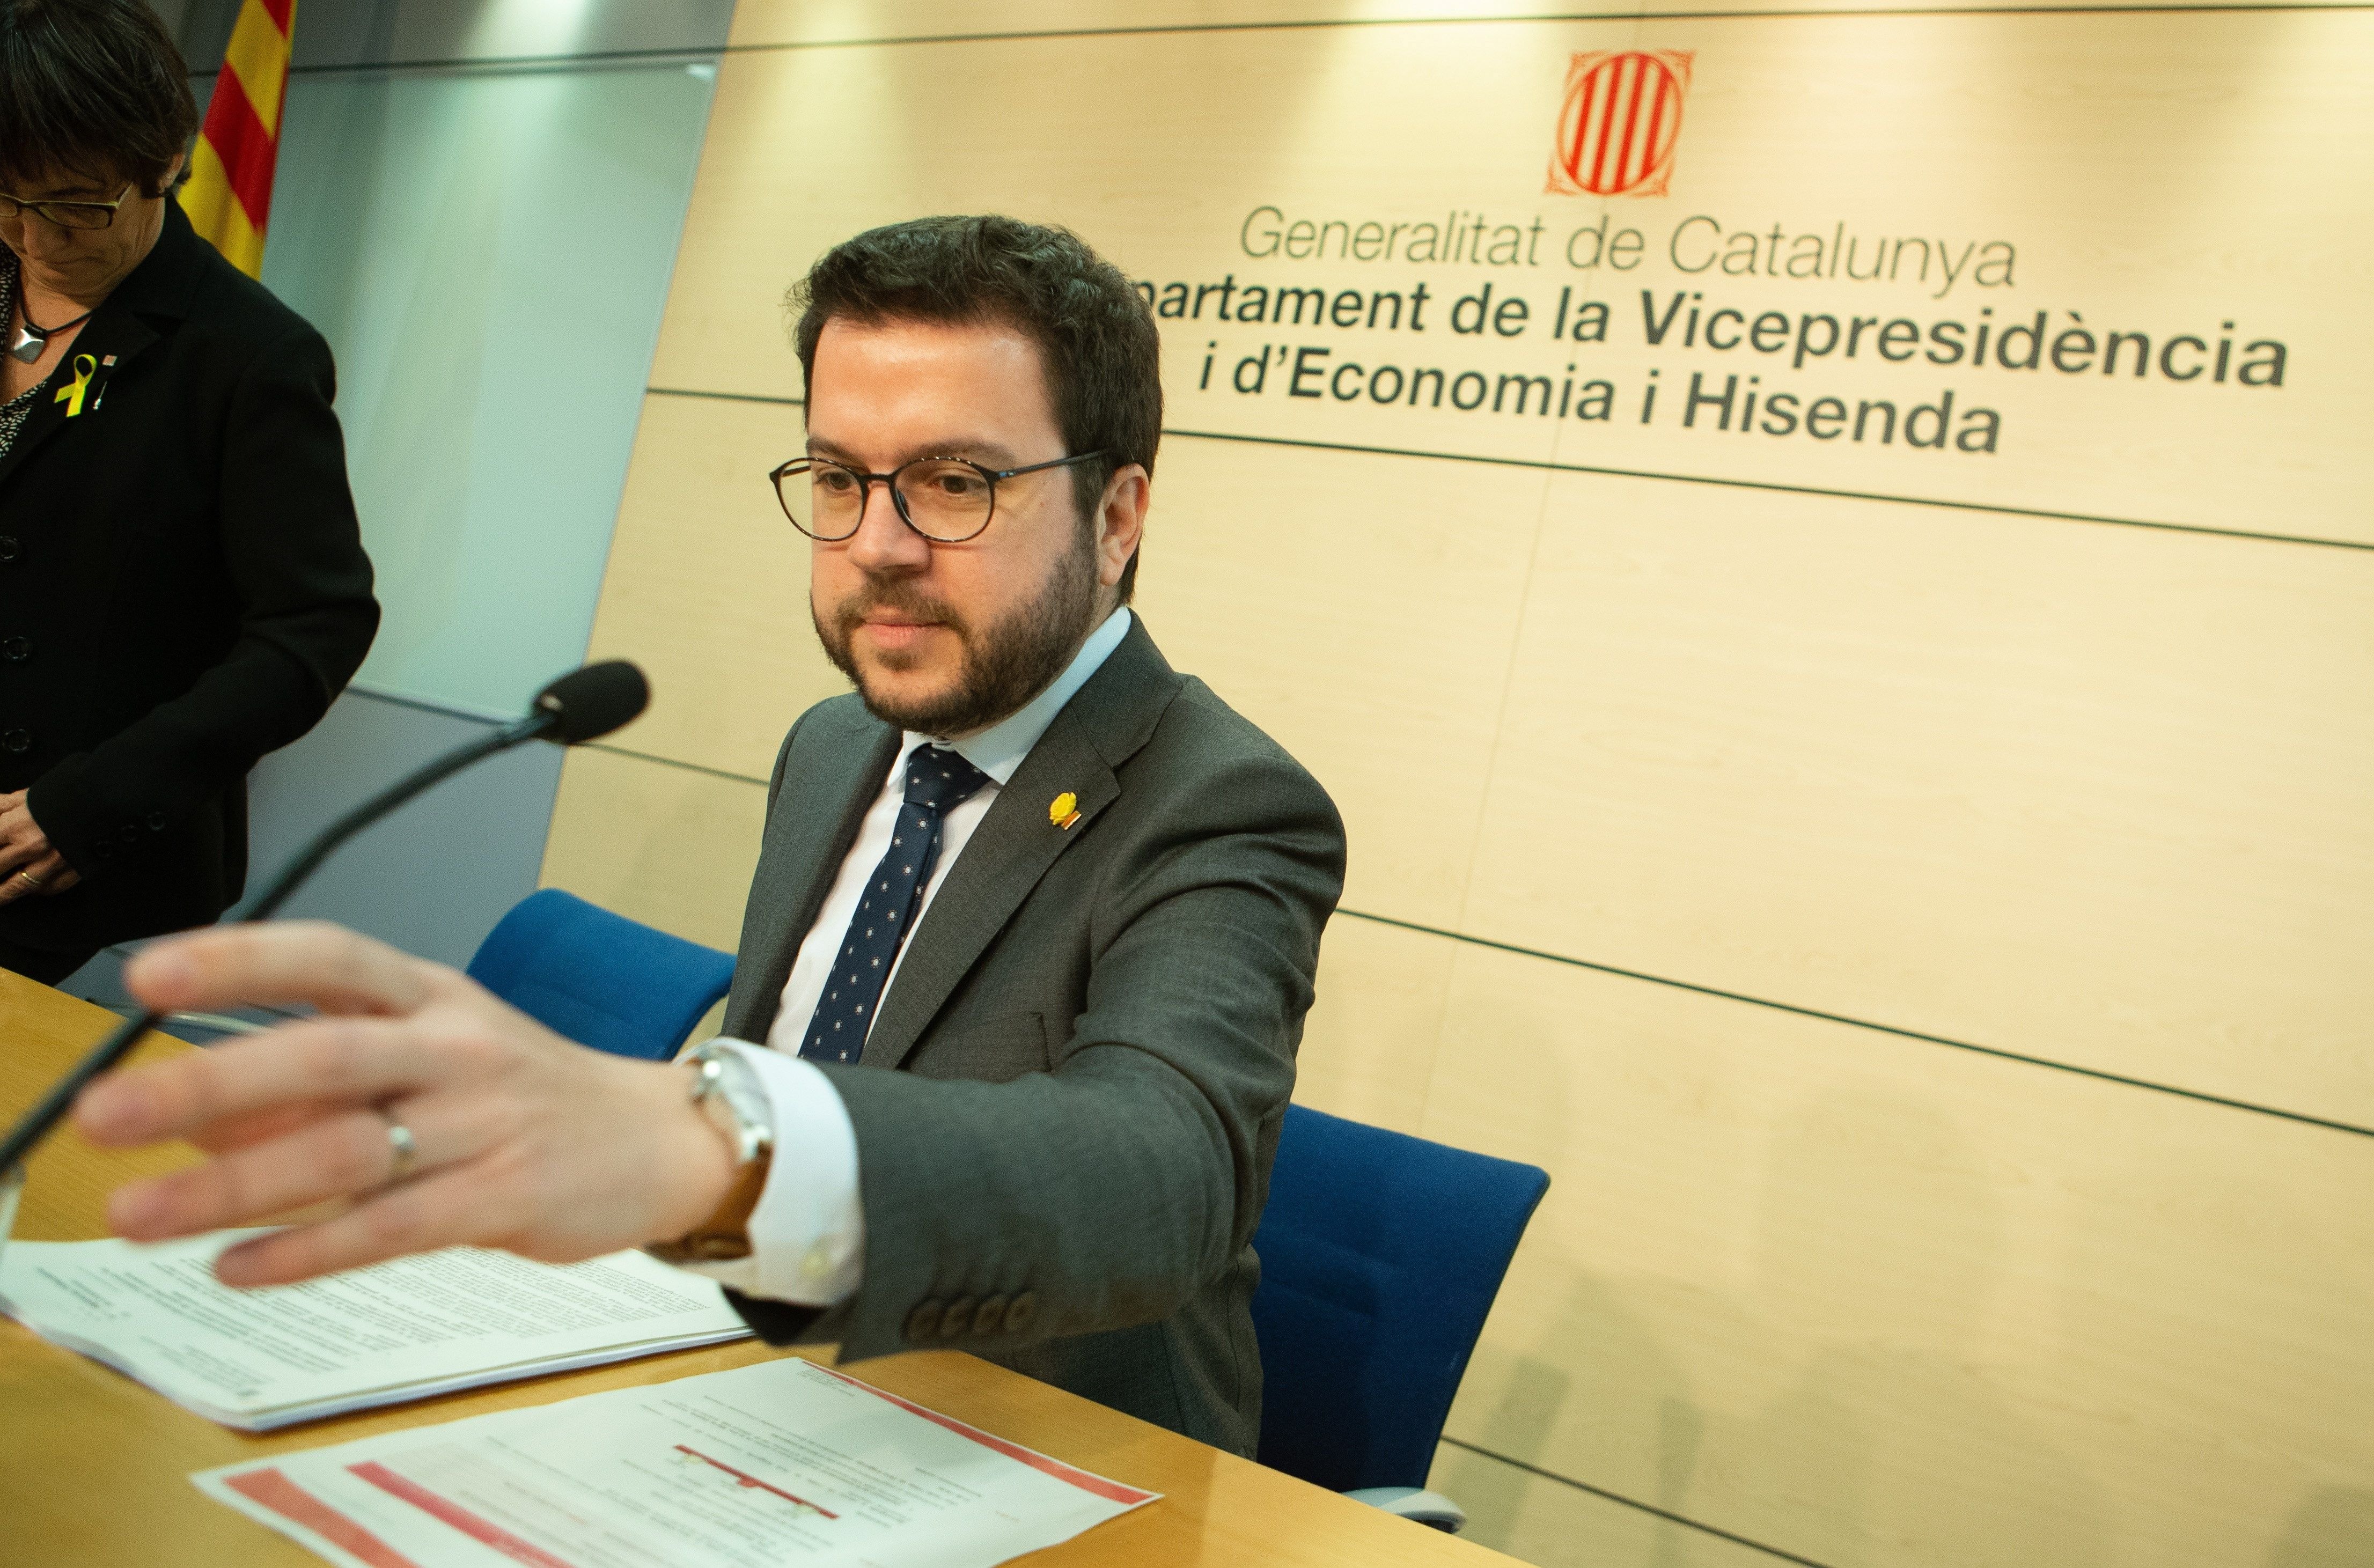 Aragonès: "El objetivo es llegar a abrir el espacio de negociación"